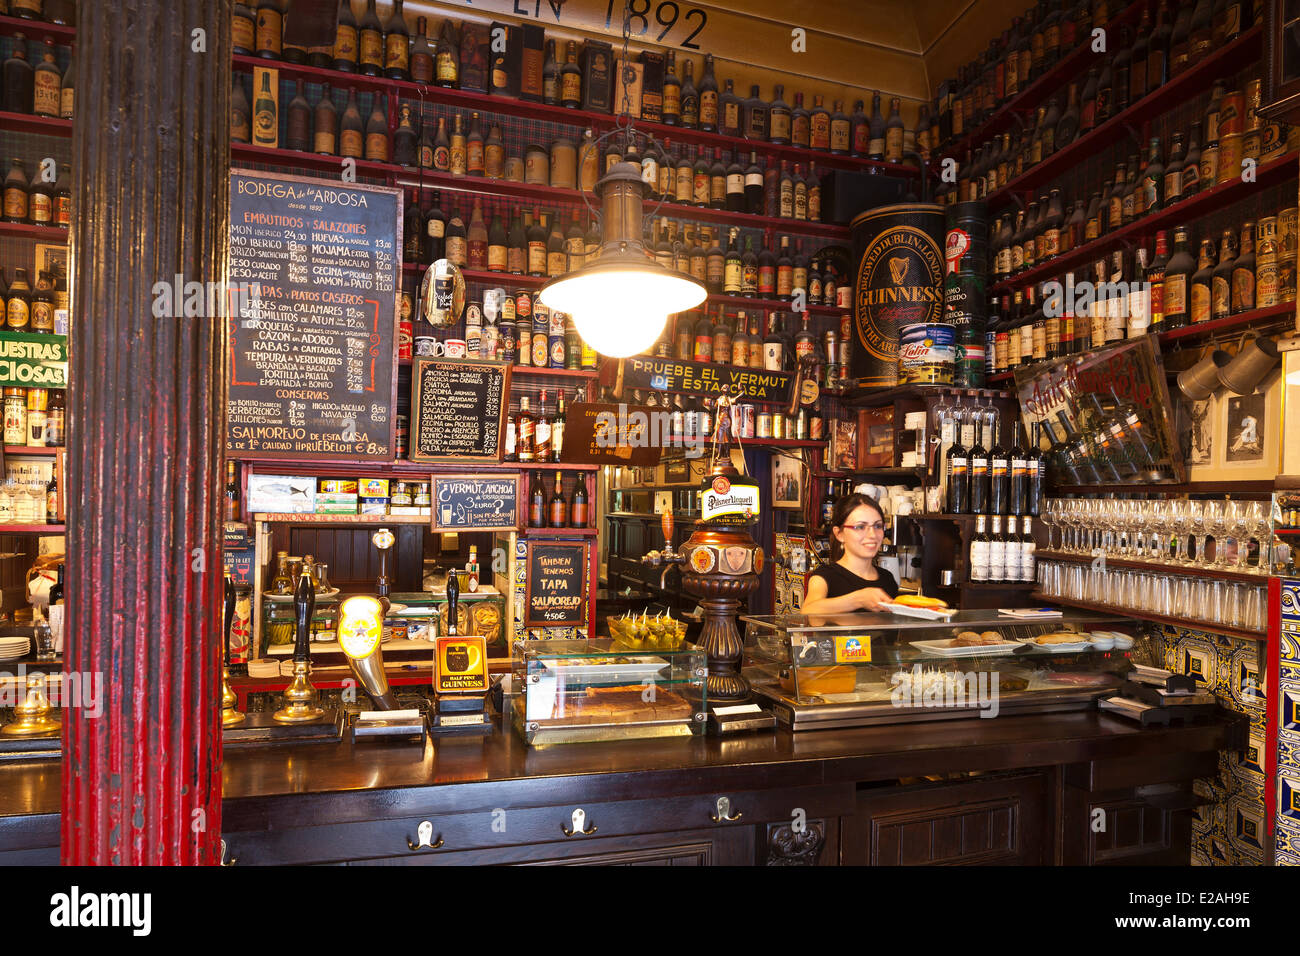 Spain, Madrid, Malasana, the bodega Ardosa, tapas bar in 1892 Stock Photo -  Alamy